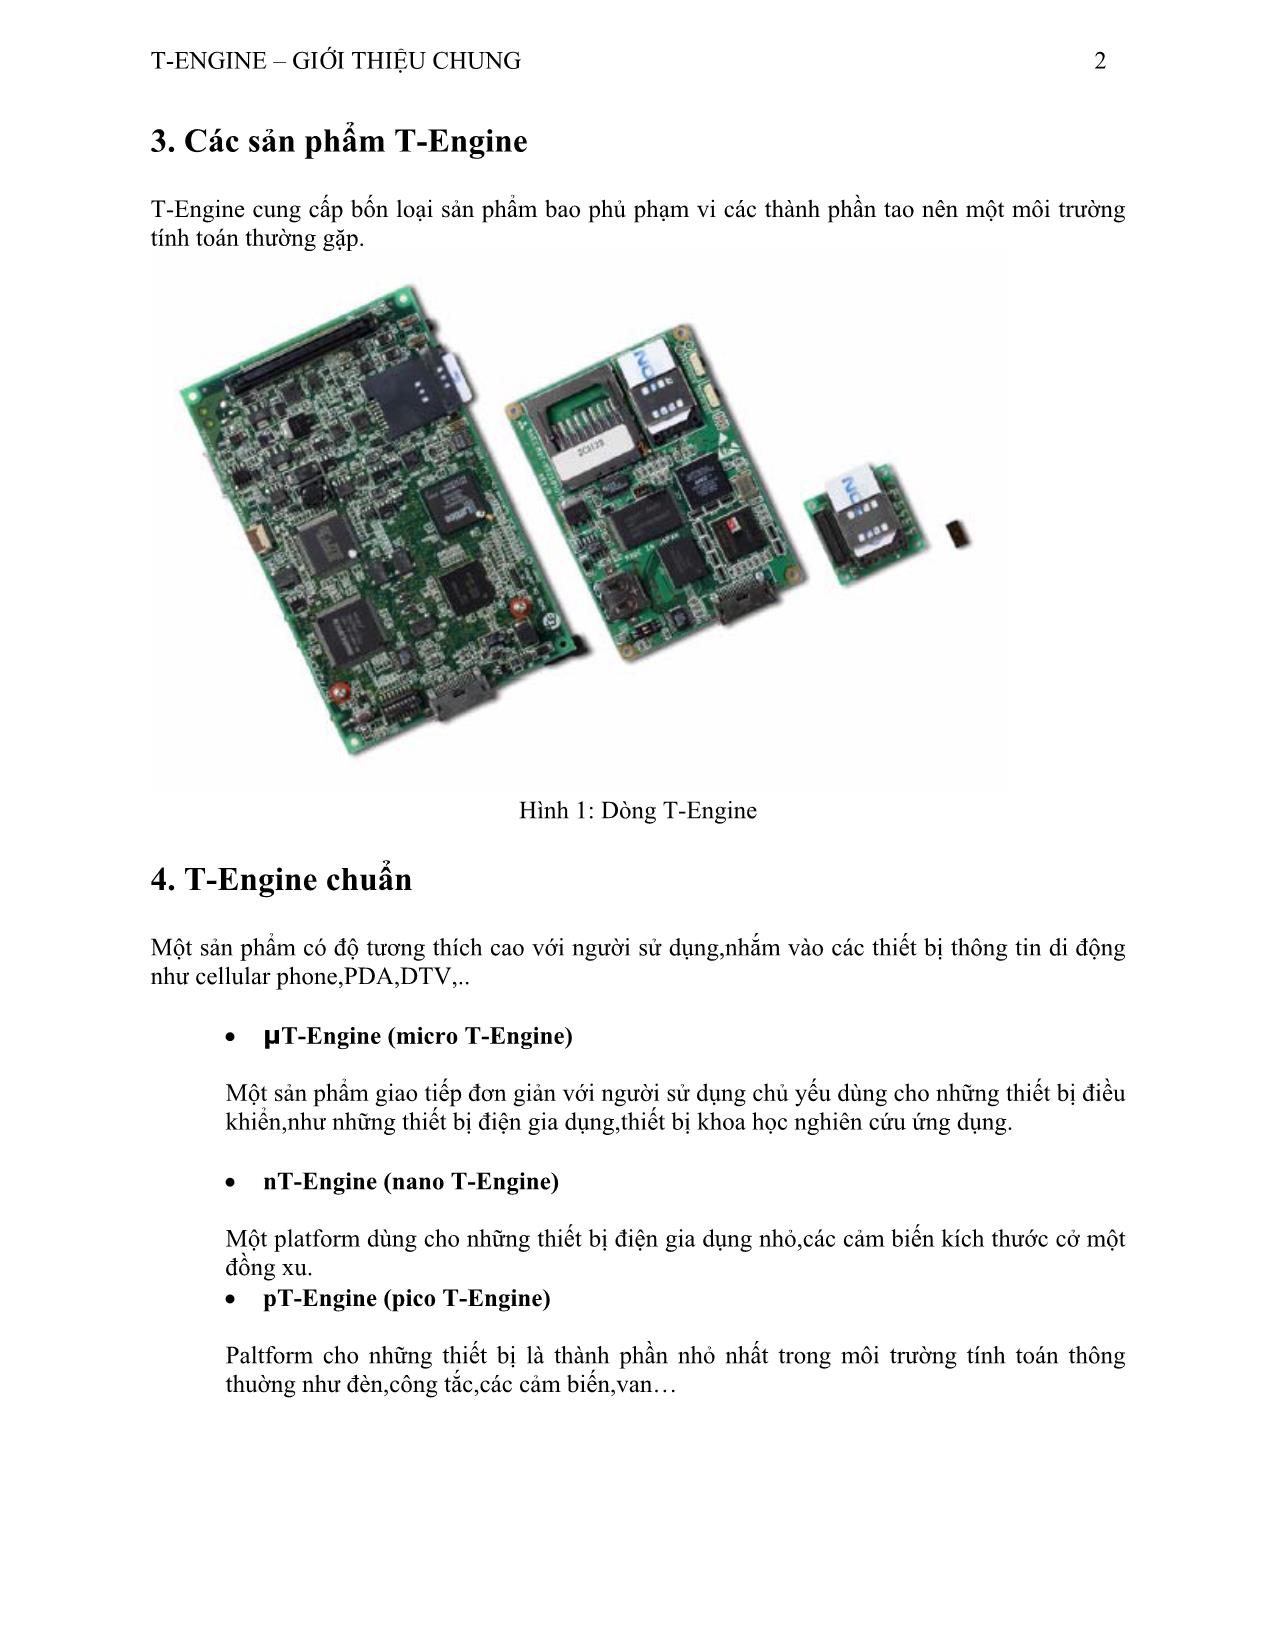 T-Engine trang 2